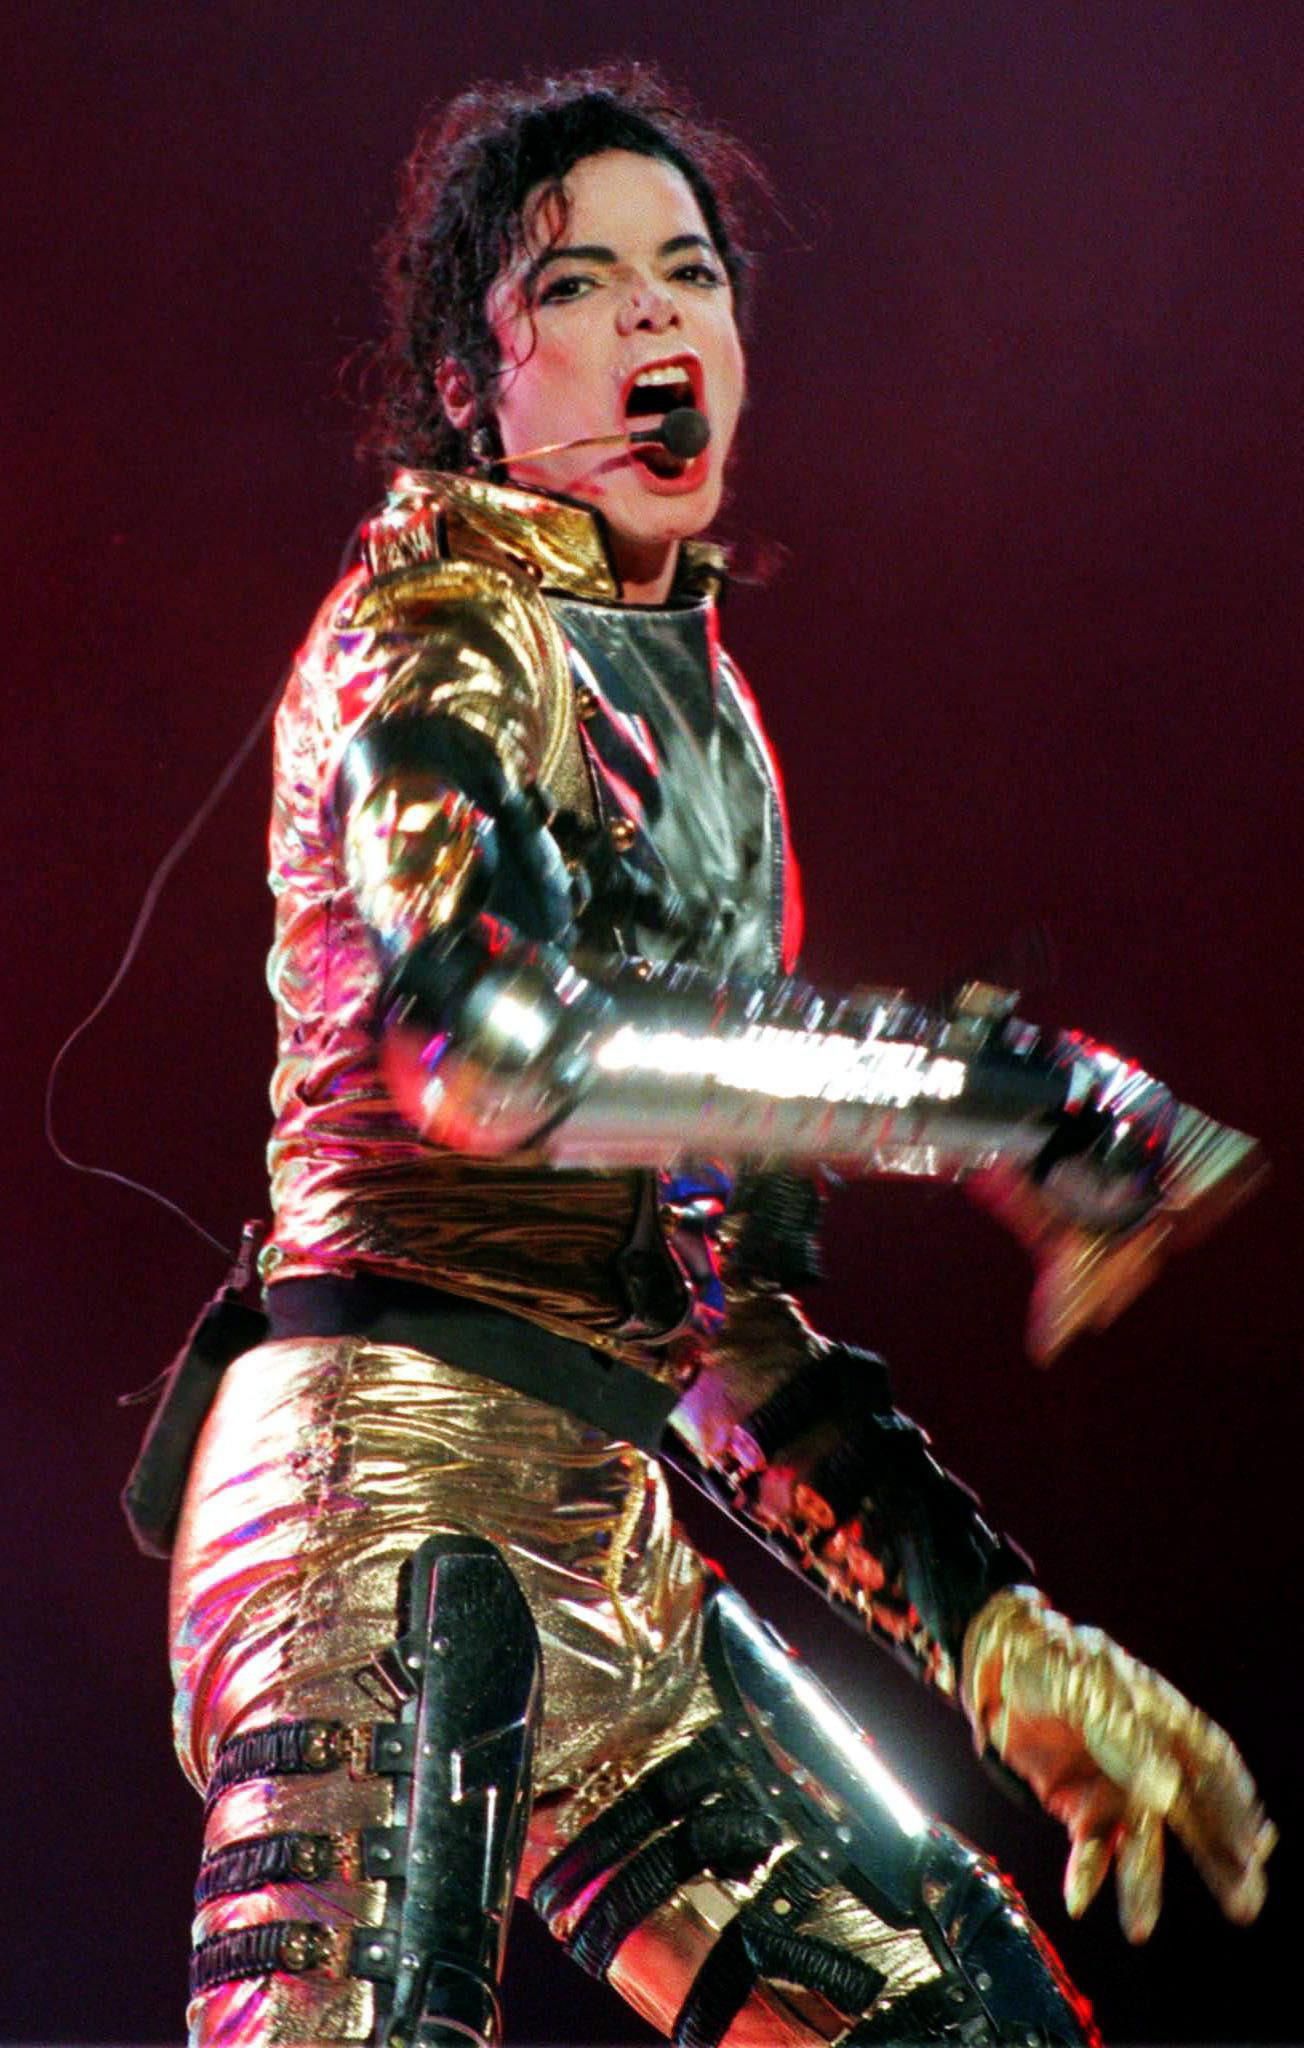 Bling of pop: Michael Jackson's wardrobe on show in London